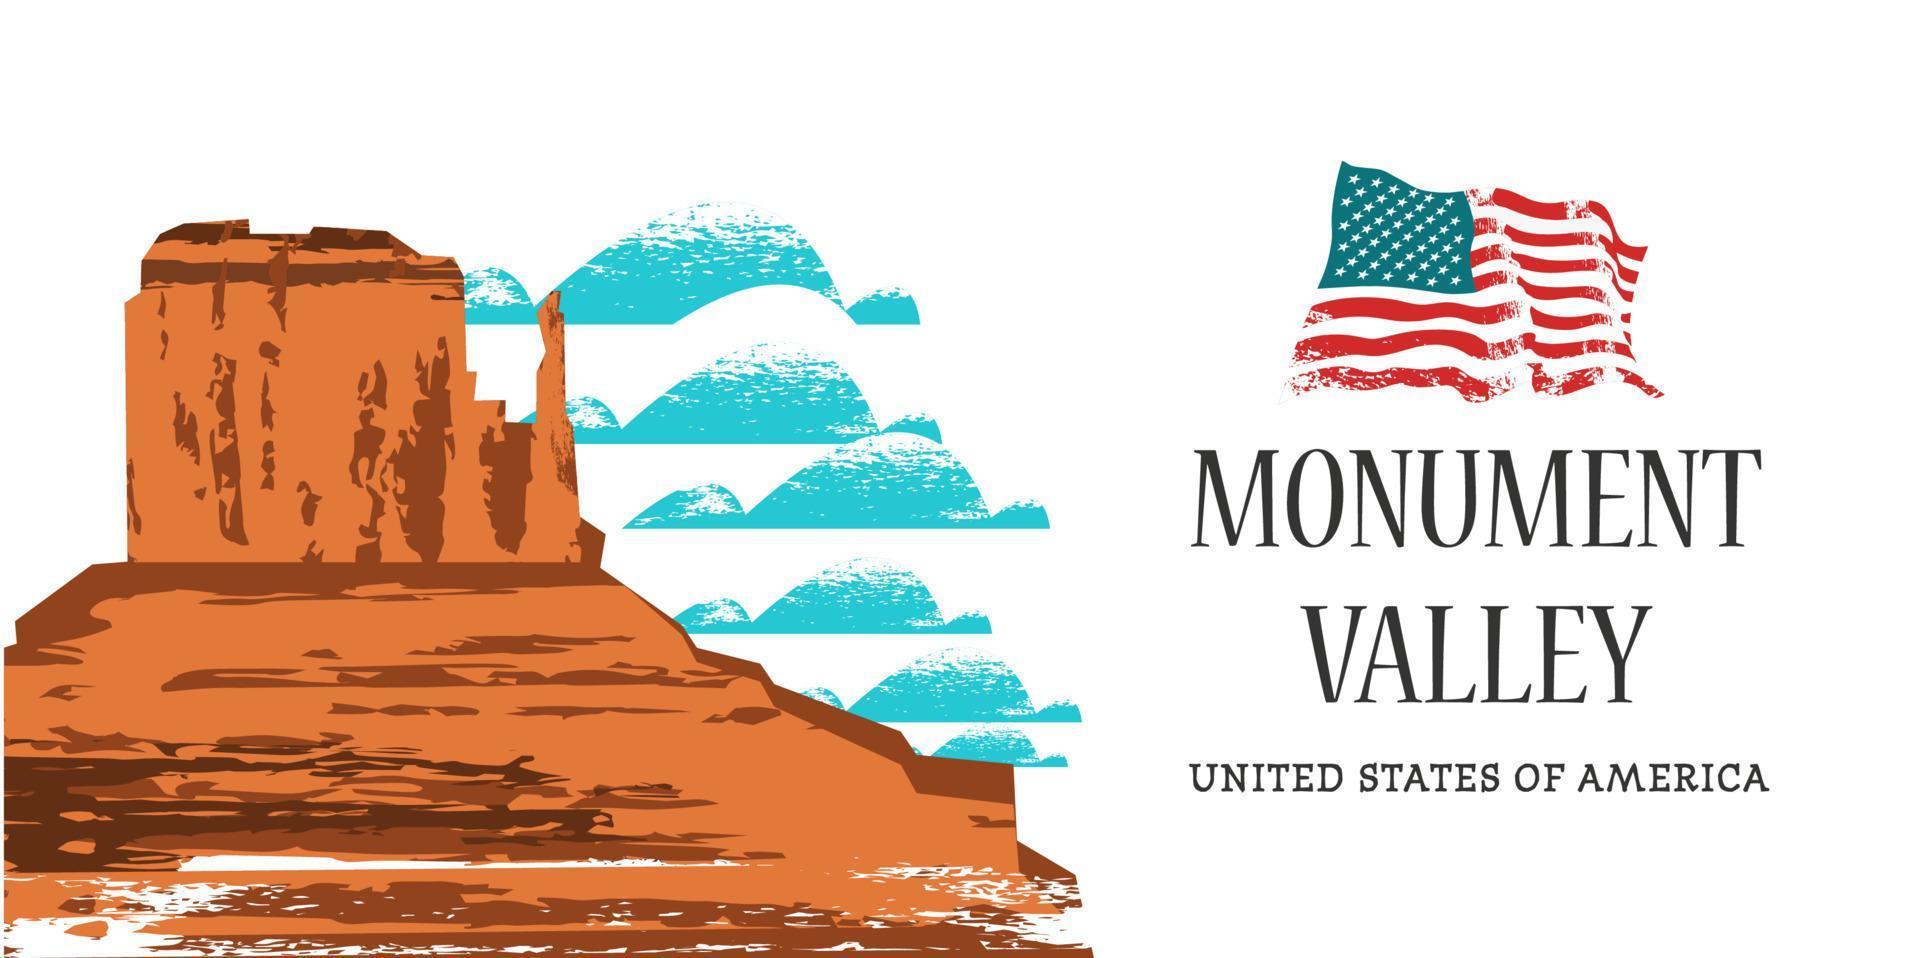 monument valley i arizona, usa. vektor illustration.